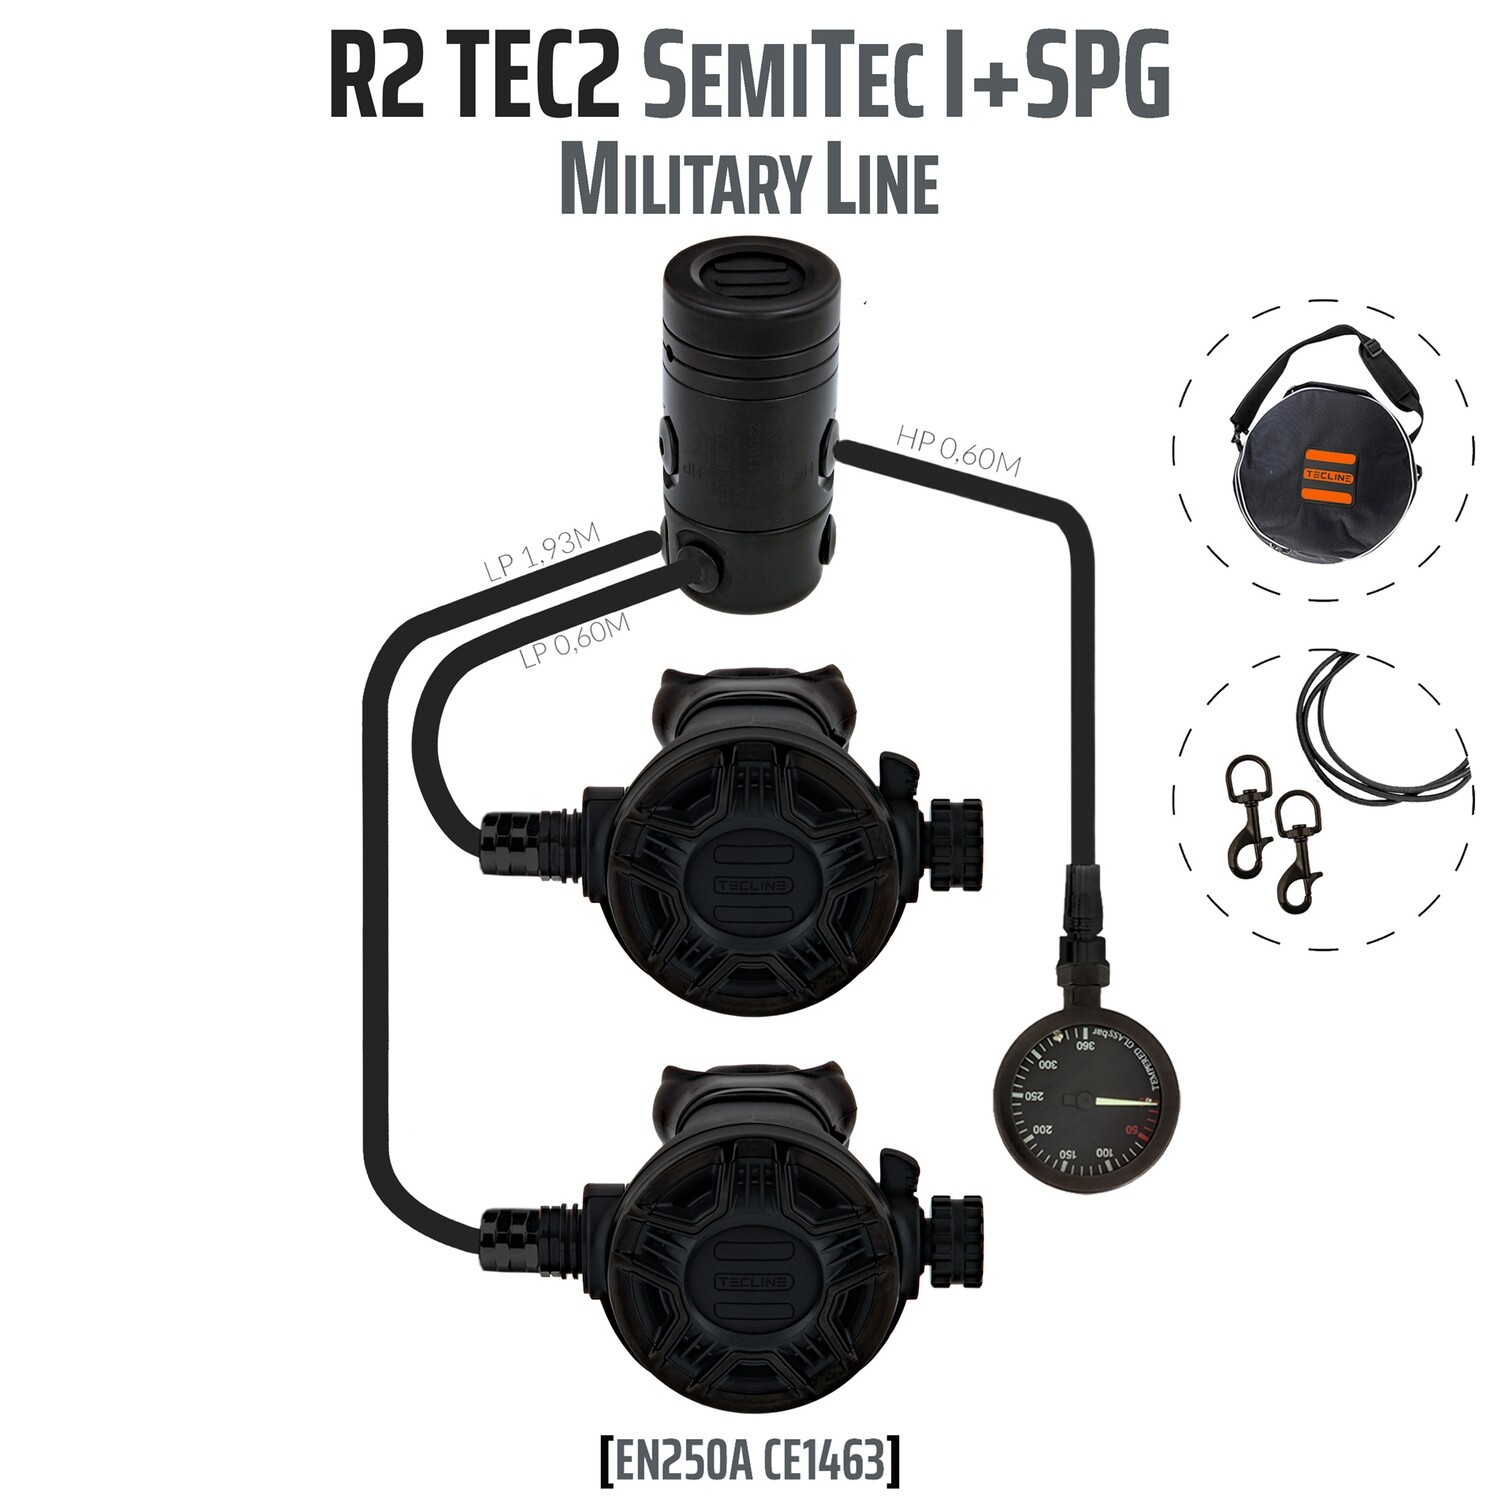 Regulator R2 TEC2 rev. SemiTec I set with SPG - Military Line